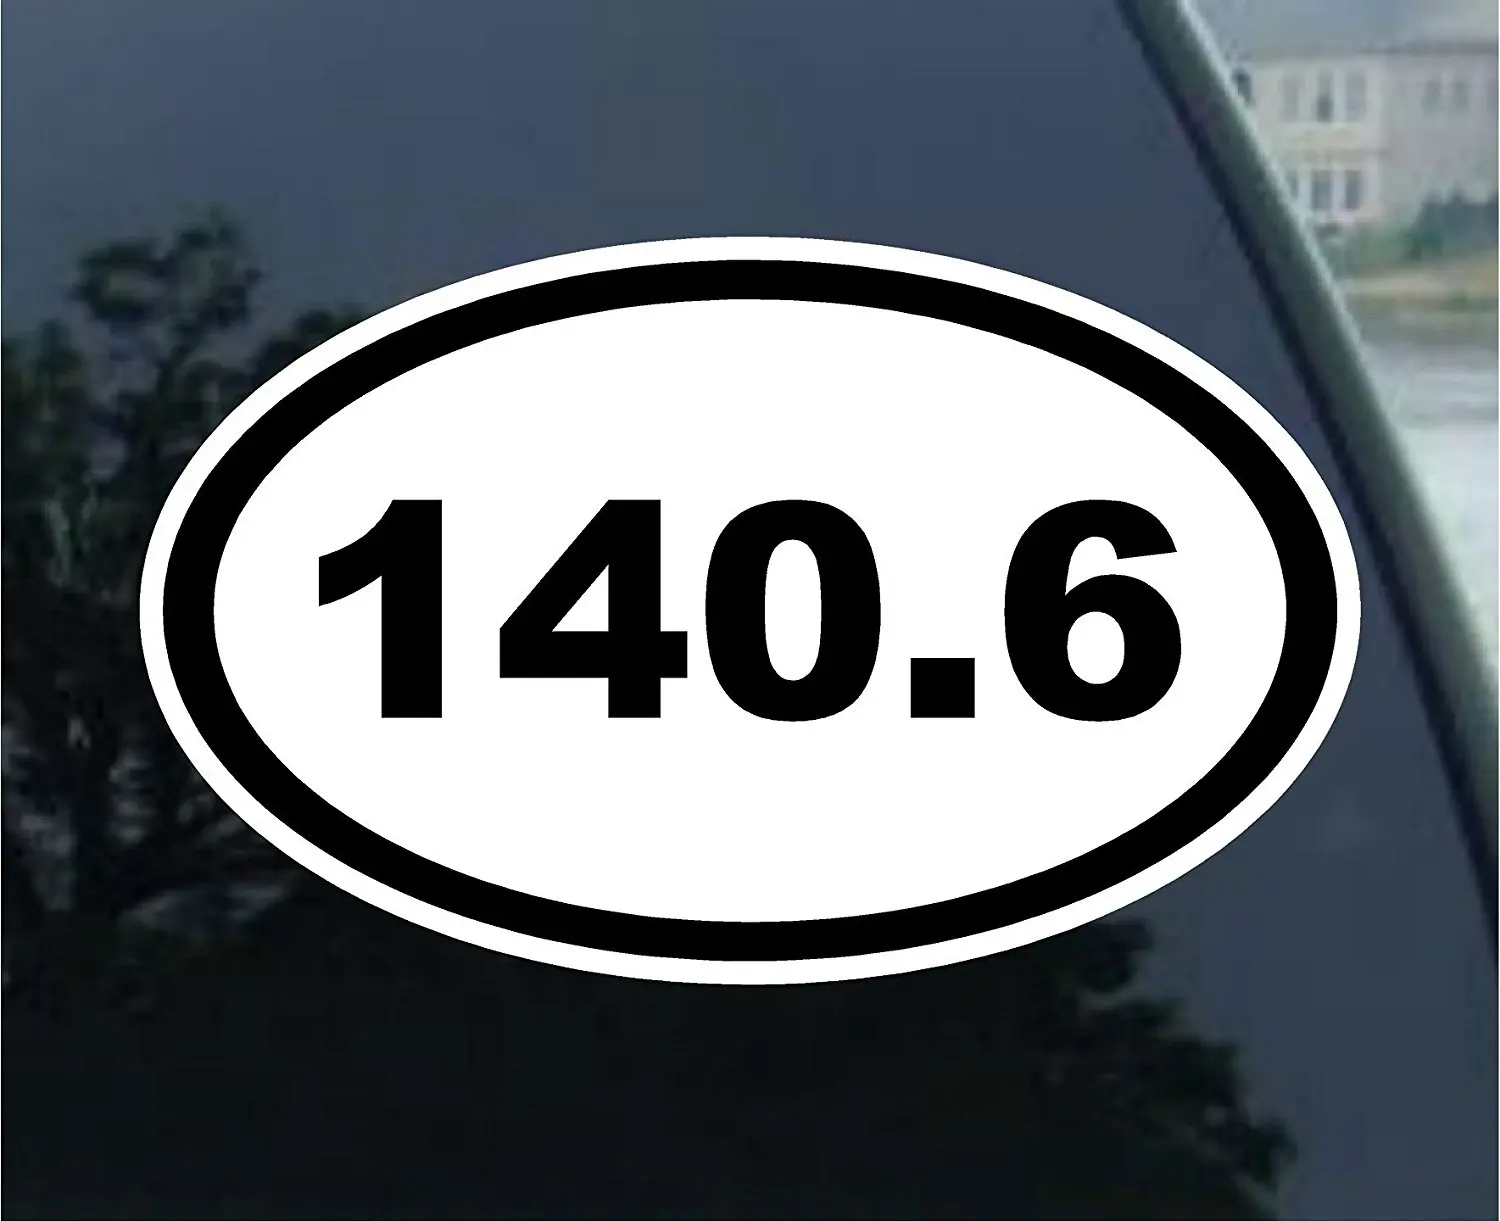 140.6 ironman sticker triathlon marathon all chrome and regular vinyl color